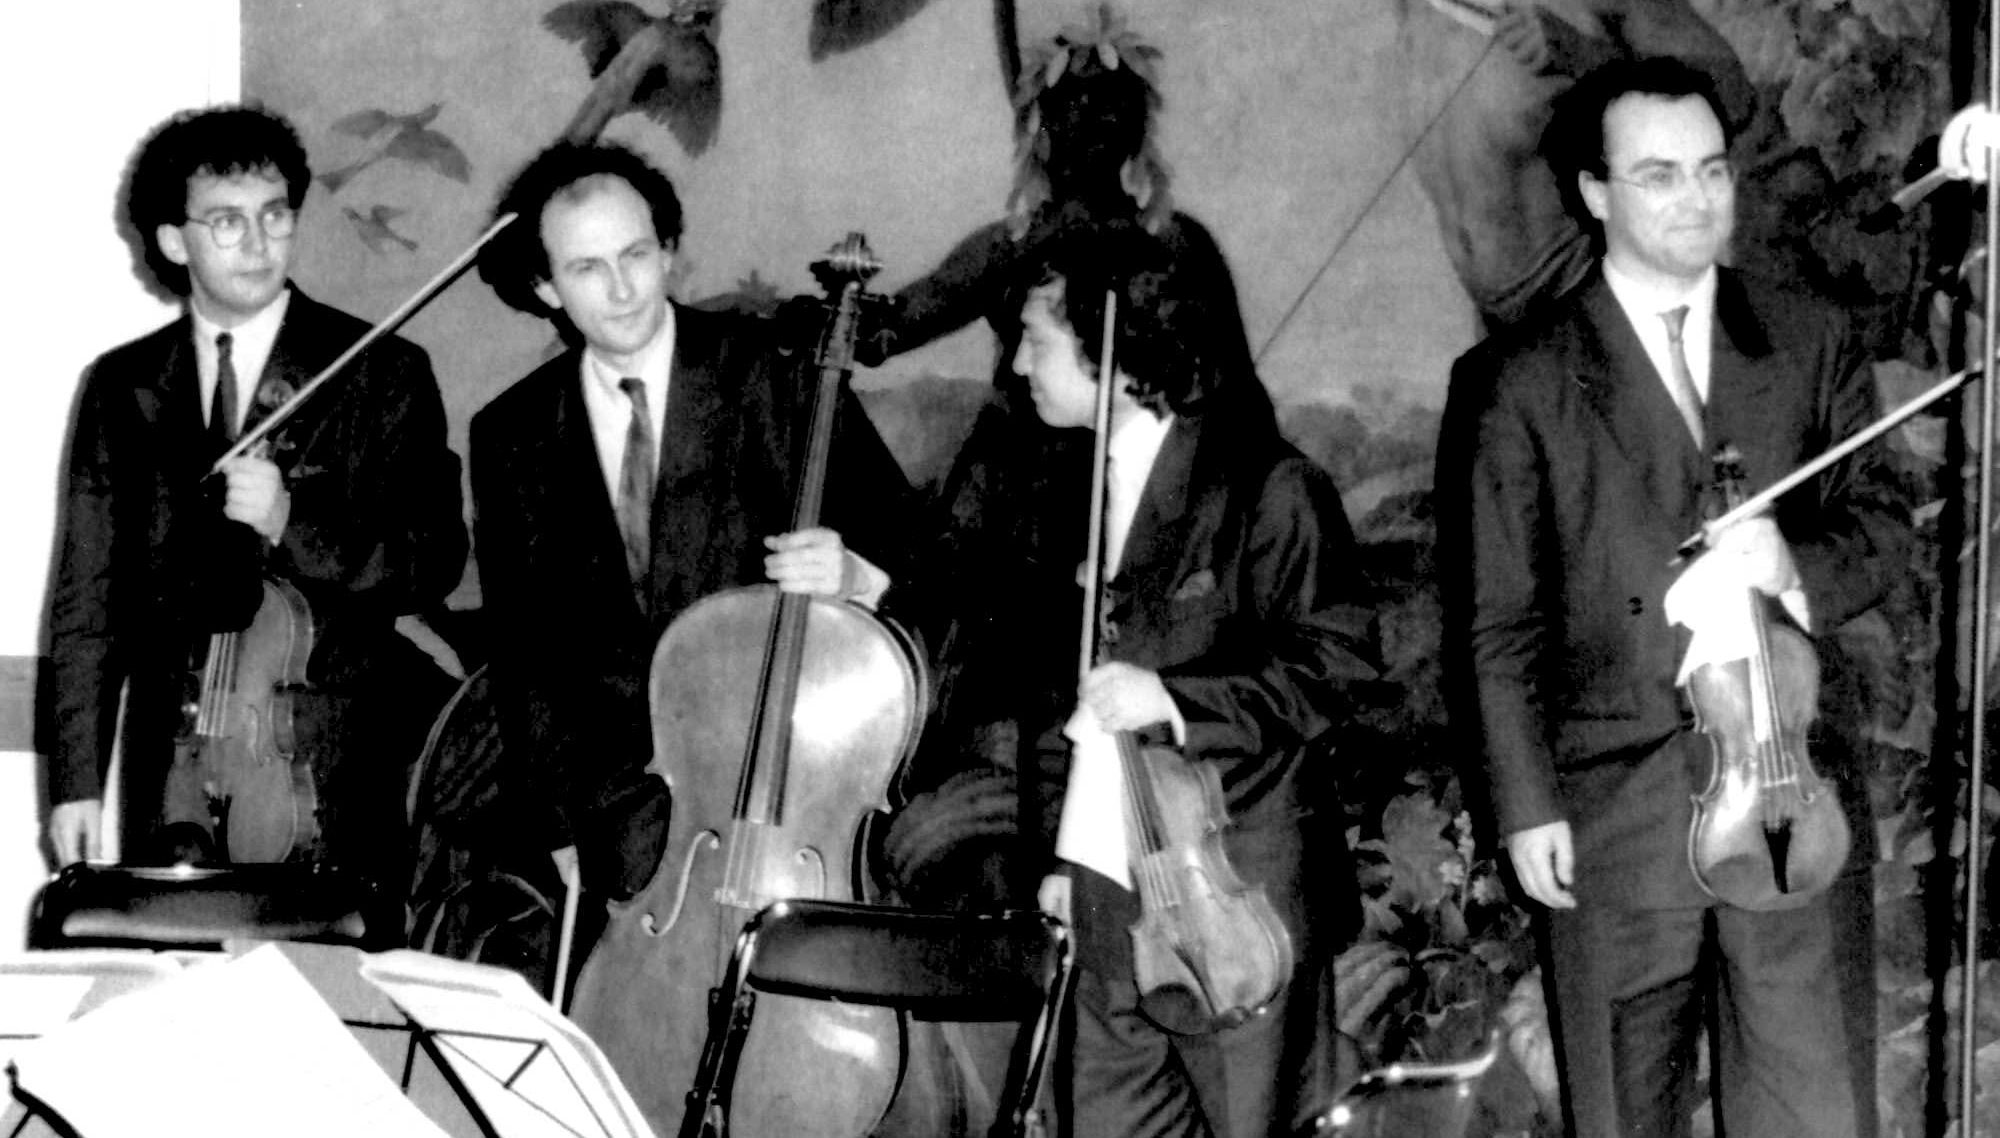 Quatuor Ysaye, concert at the Orangerie, circa 1990. Archives and History BNP Paribas.